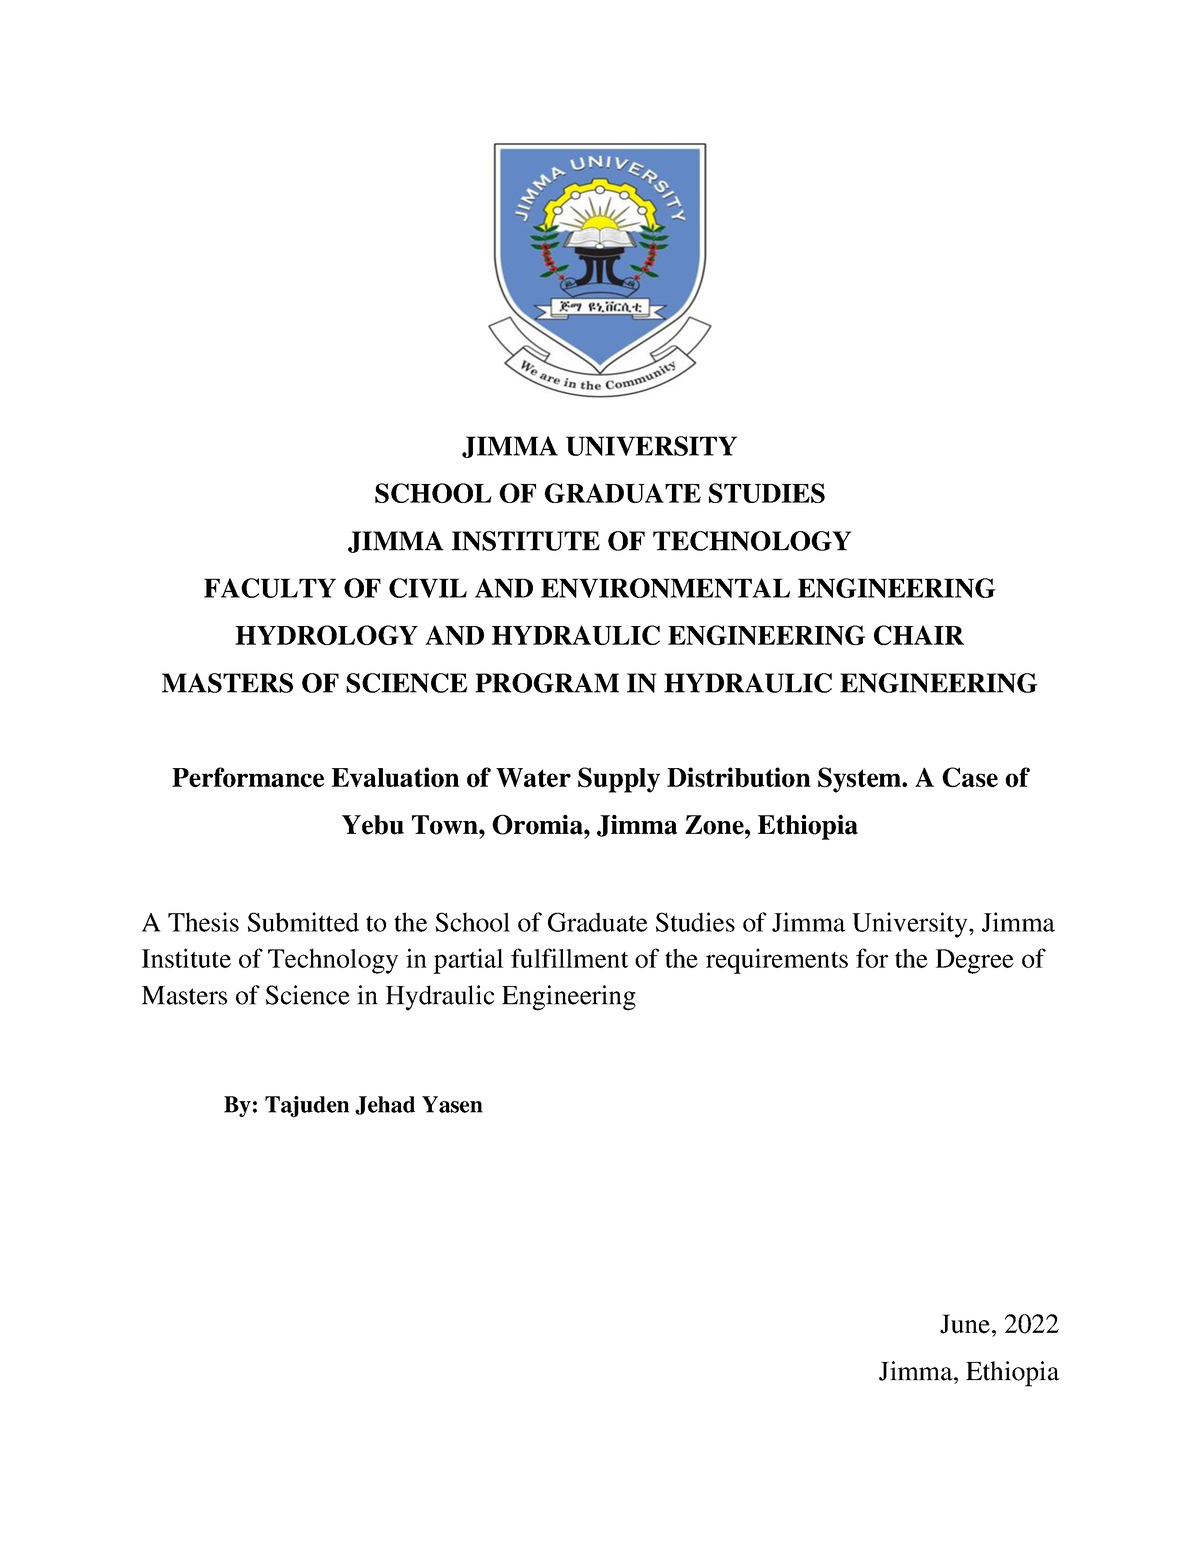 jimma university thesis writing format